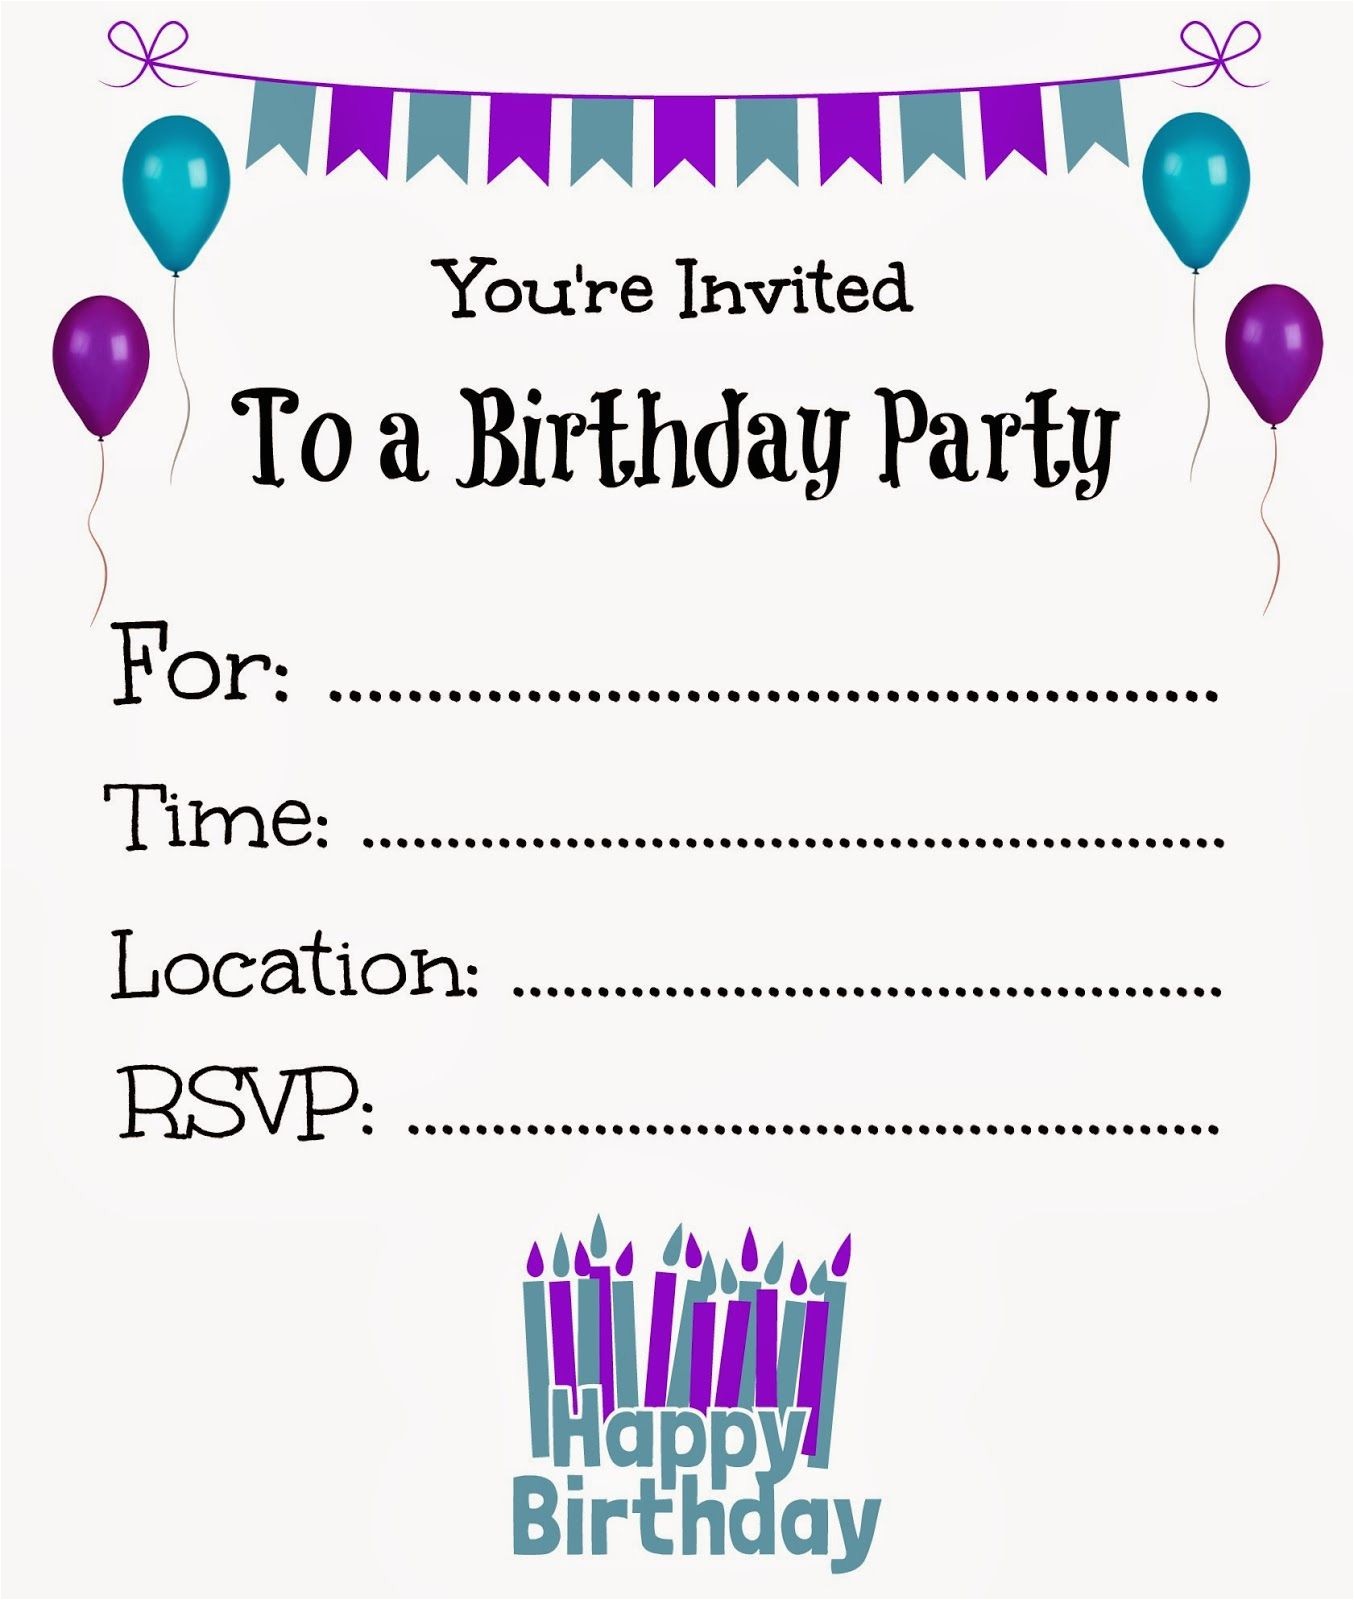 Free Printable Birthday Invitations for Kids Free Printable Birthday Invitations for Kids